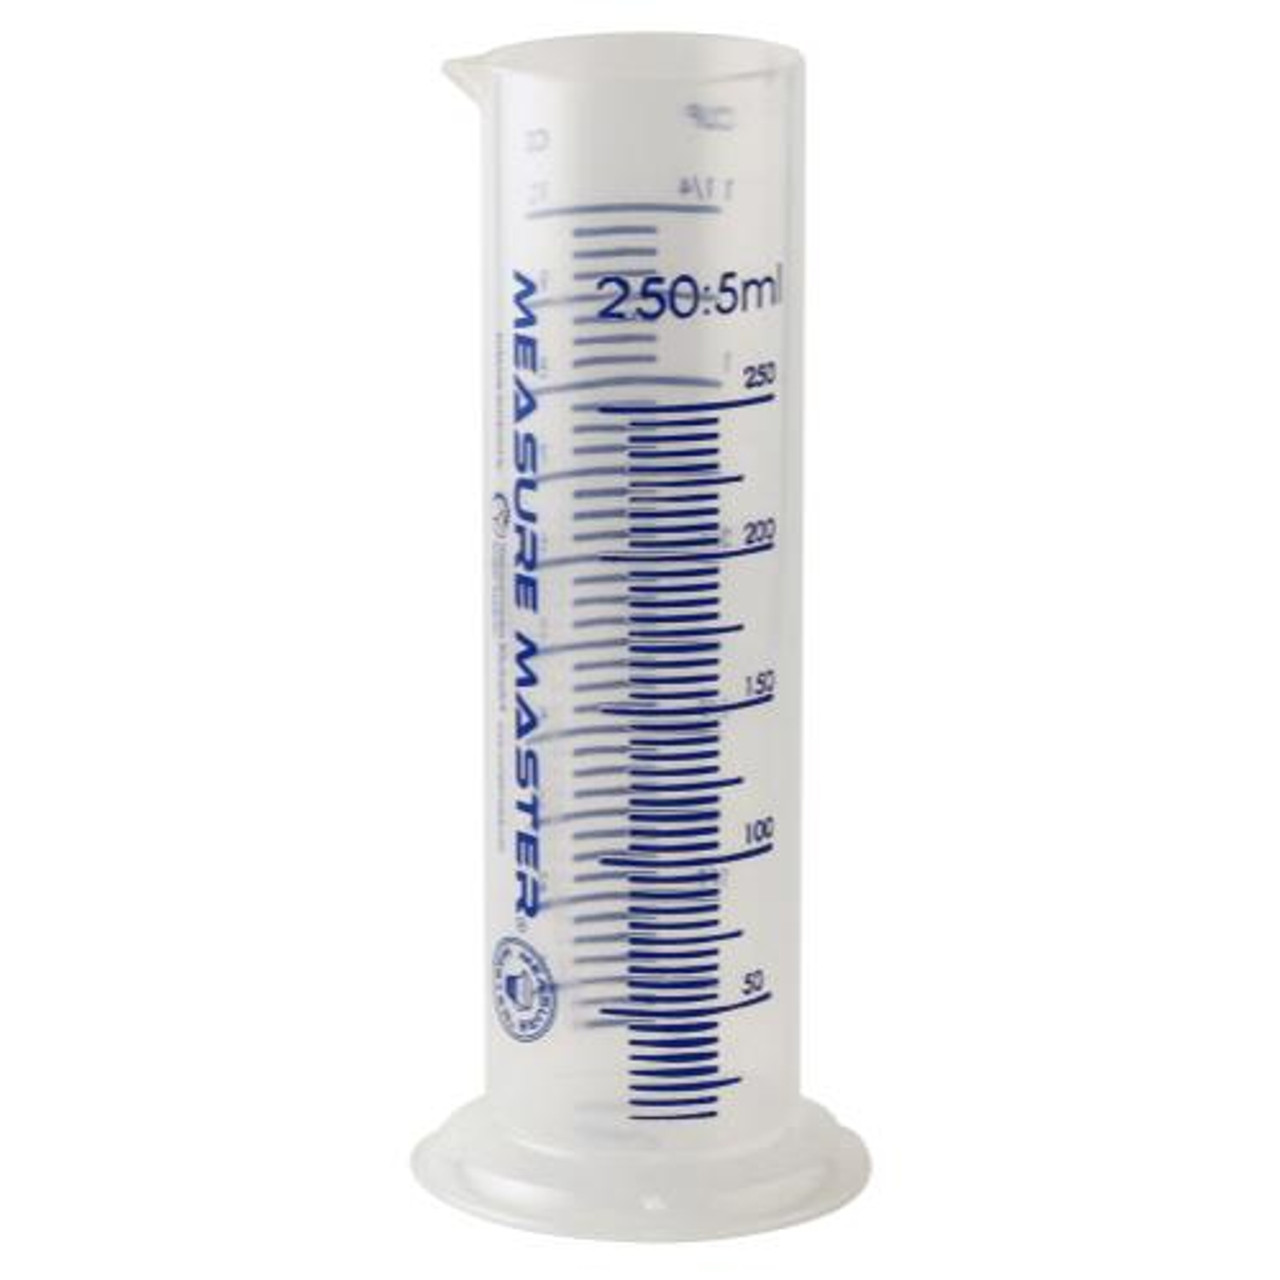 Hydrofarm Measuring Cup - 1000 ml